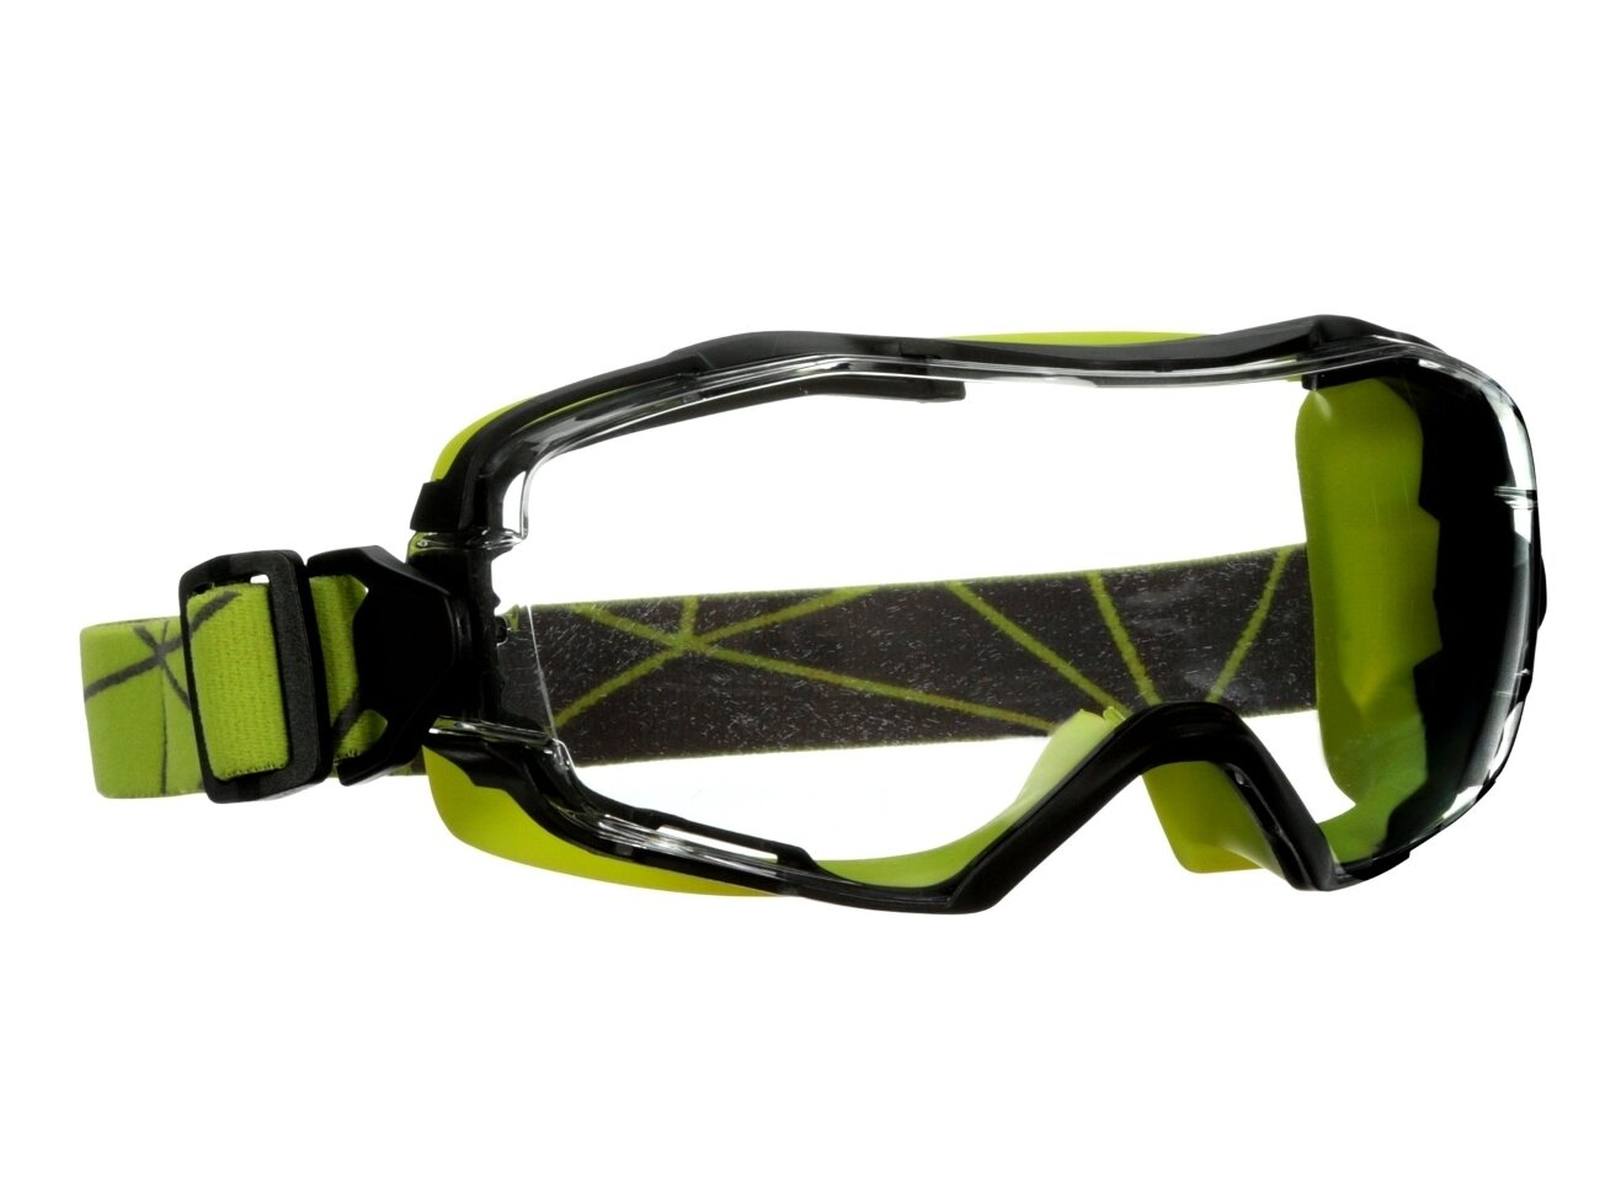 Lunettes-masque 3M GoggleGear 6000, monture vert citron, traitement anti-buée/anti-rayures Scotchgard (K